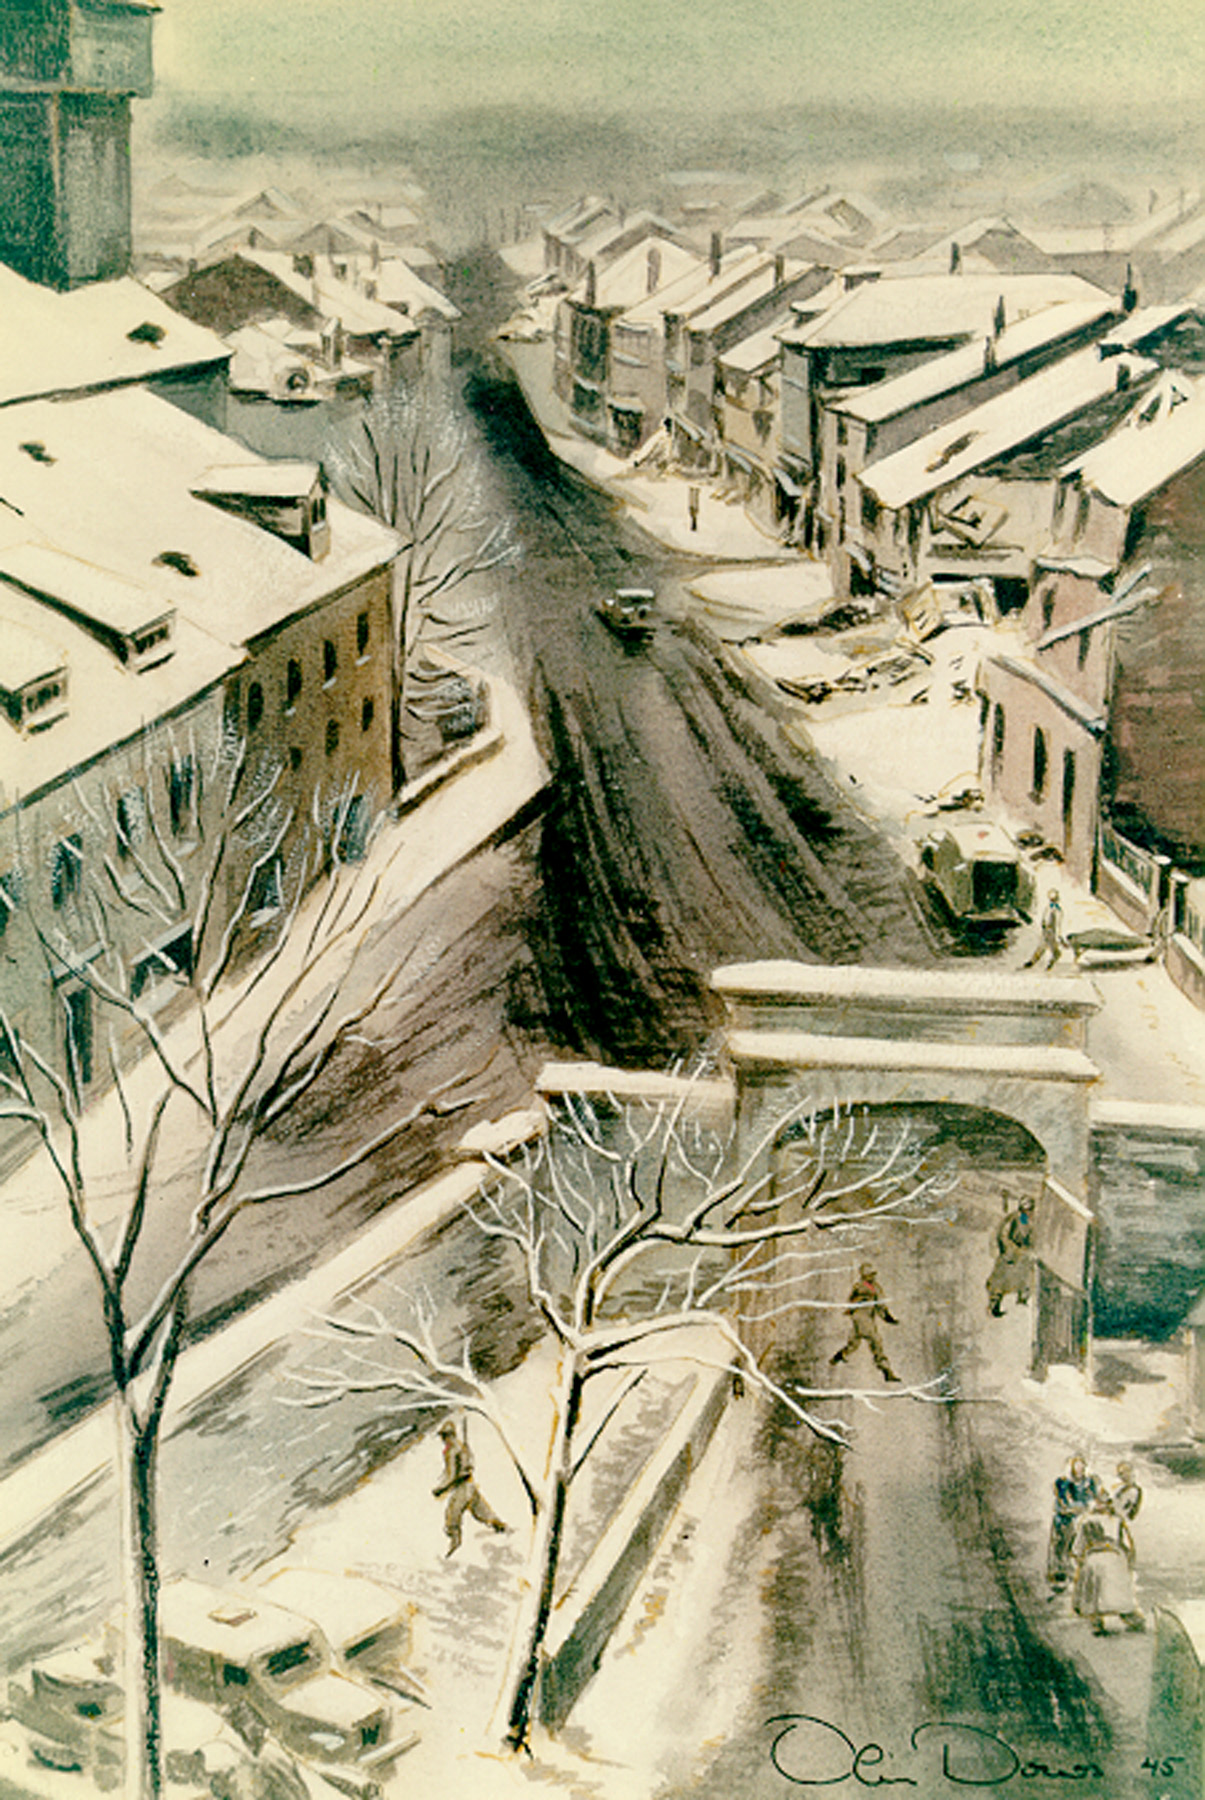 Painting 'Main Street' (Bastogne, Belgium) by Olin Dows, 1945